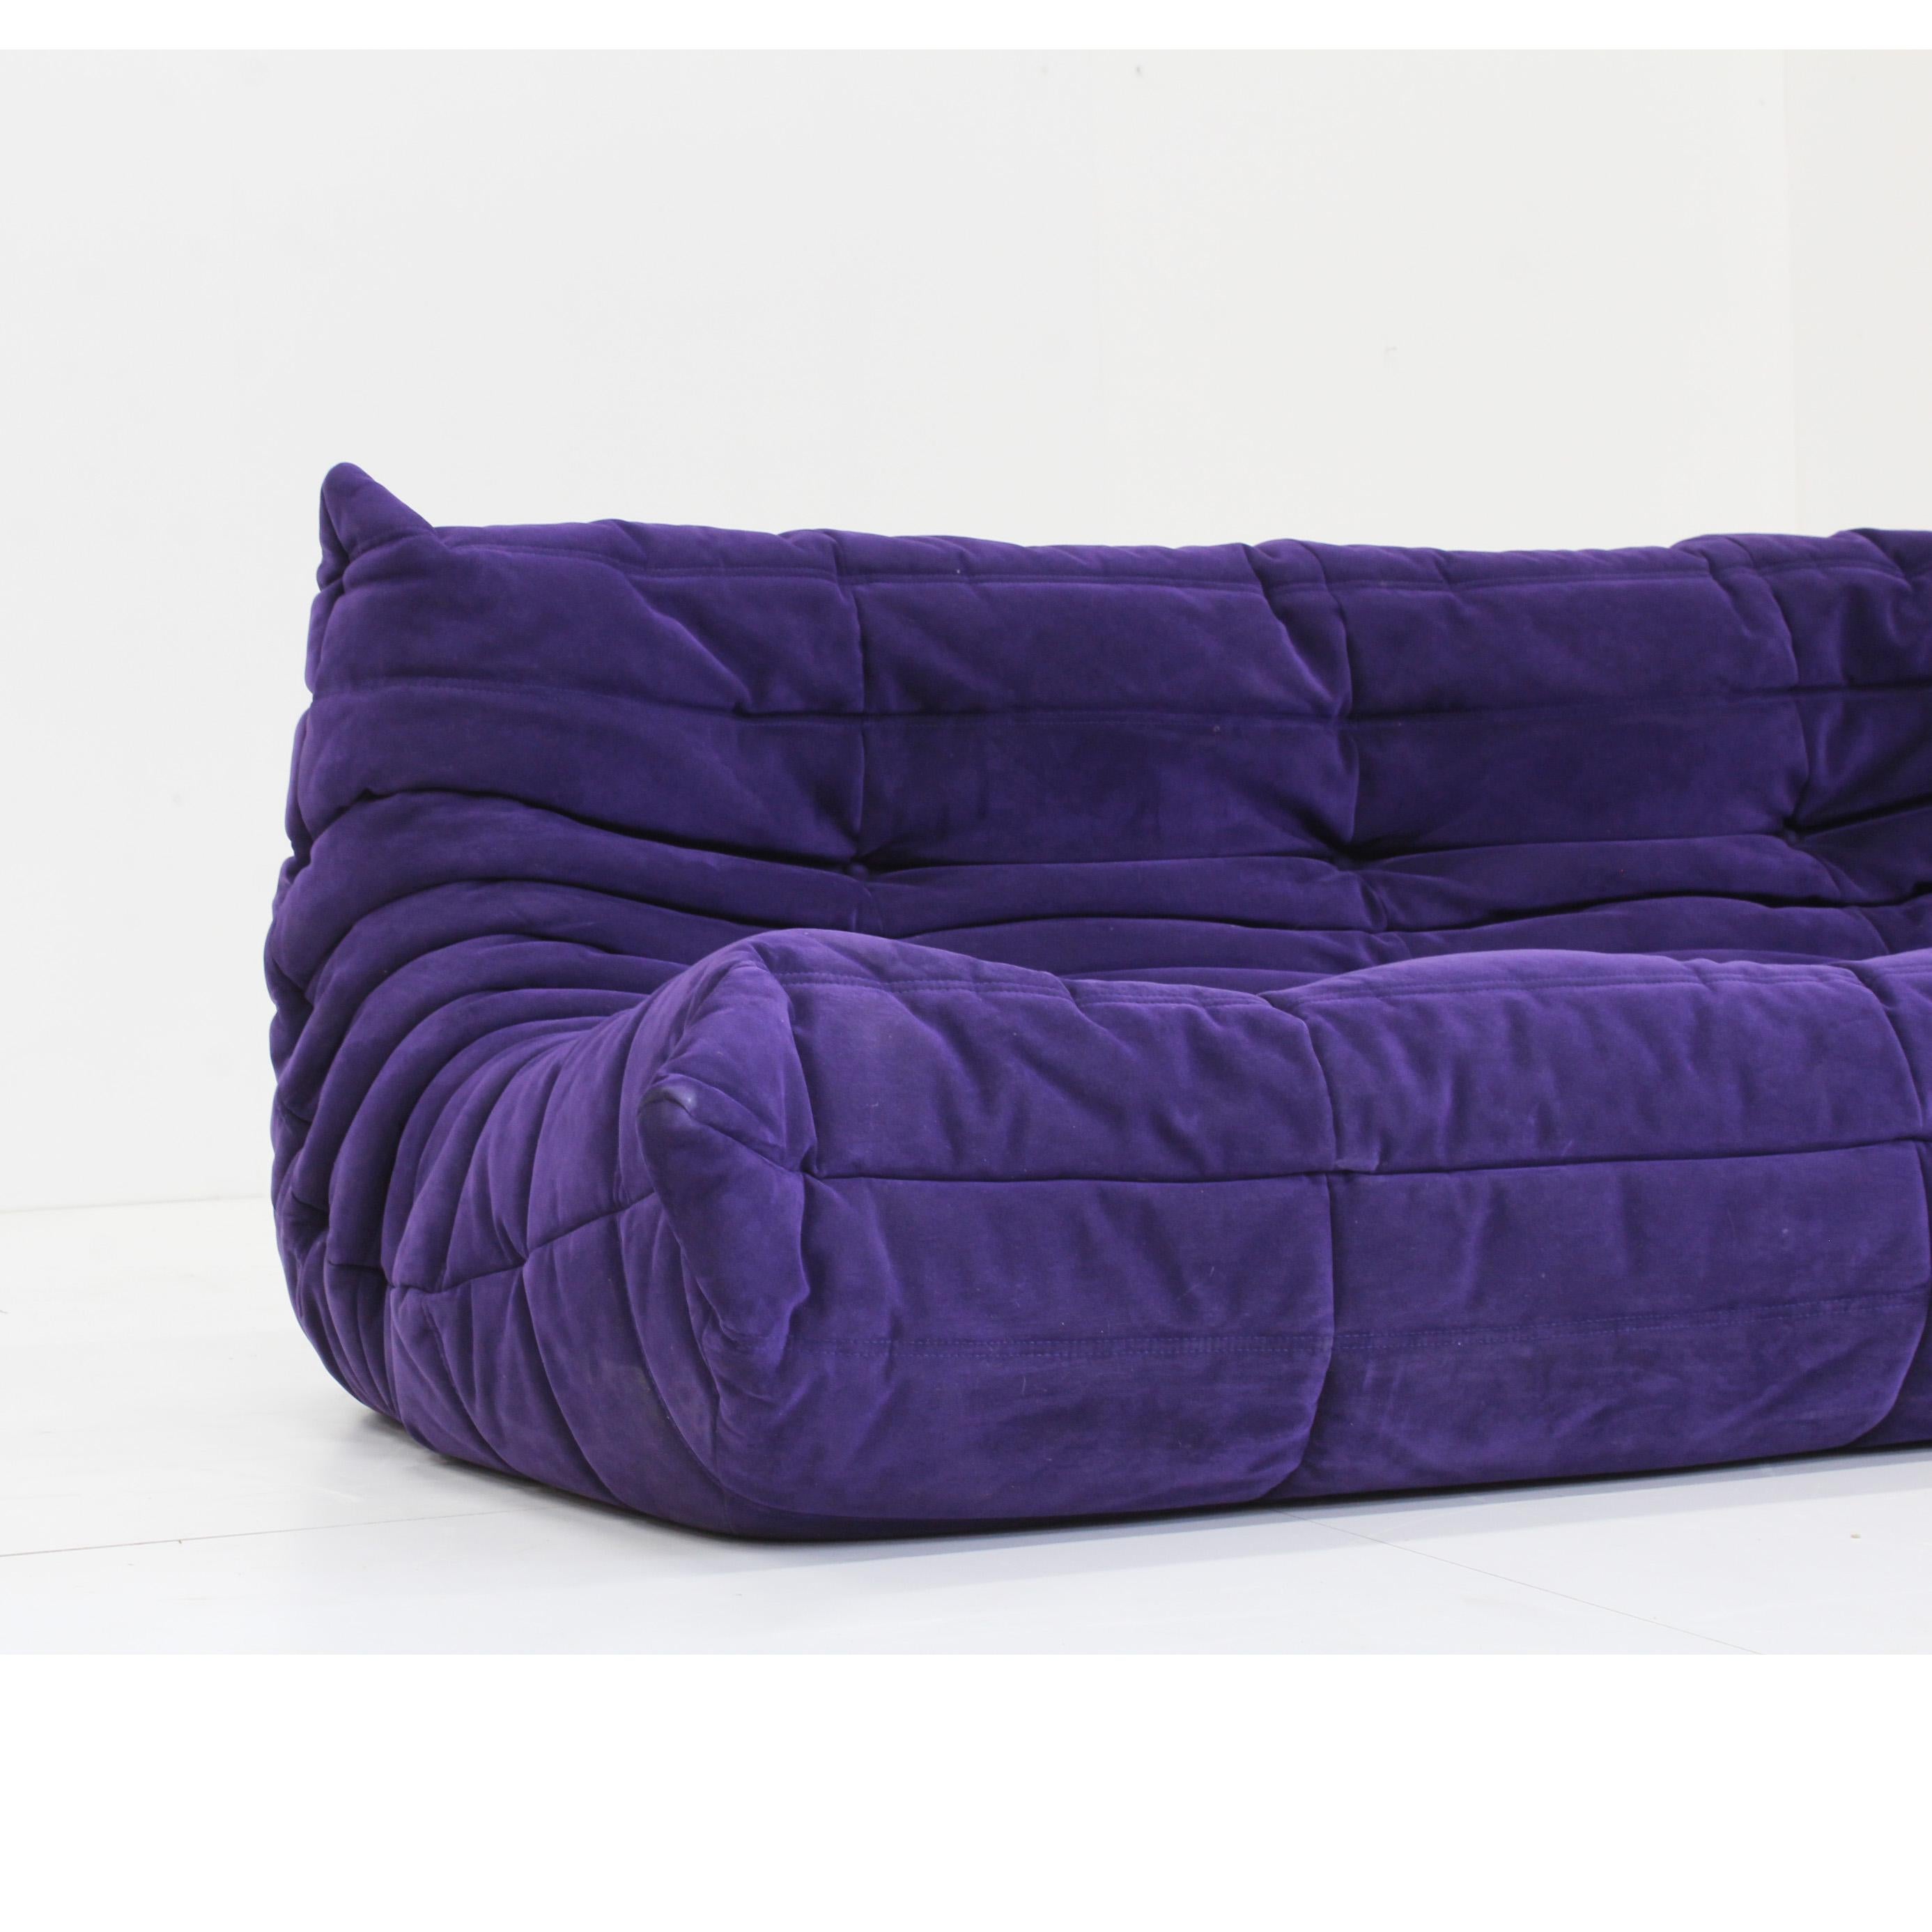 Fabric Original Vintage Togo ligne Roset 3 seater sofa purple alacantra 